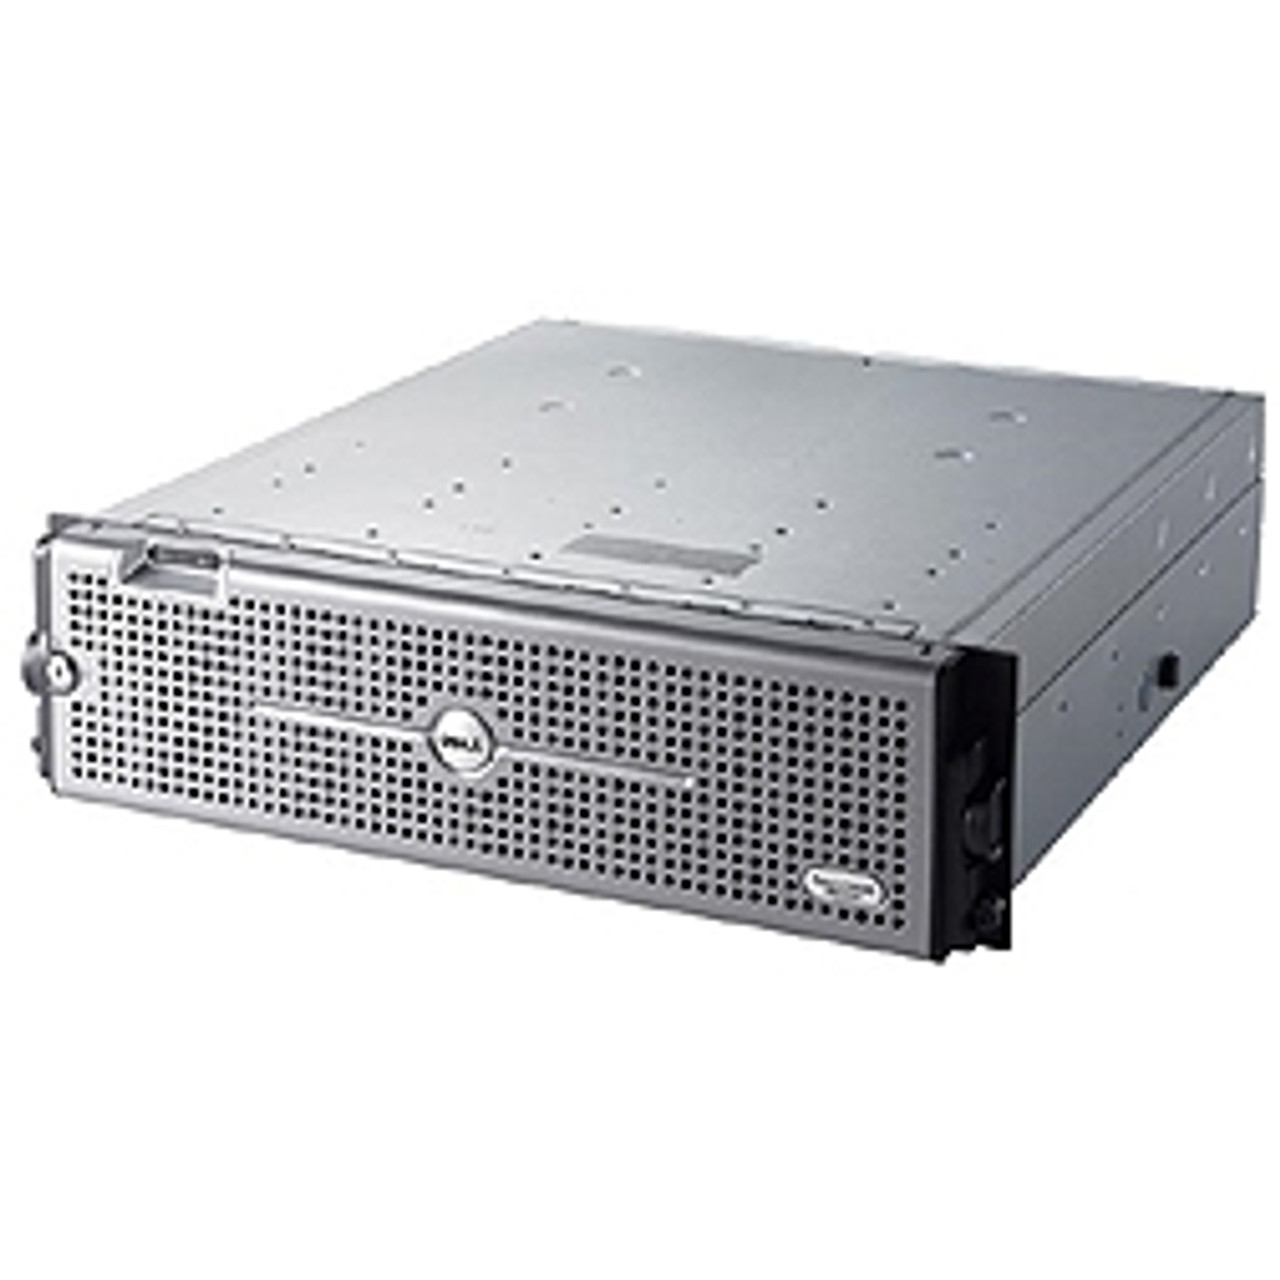 Dell PowerVault MD3000 Storage Arrays